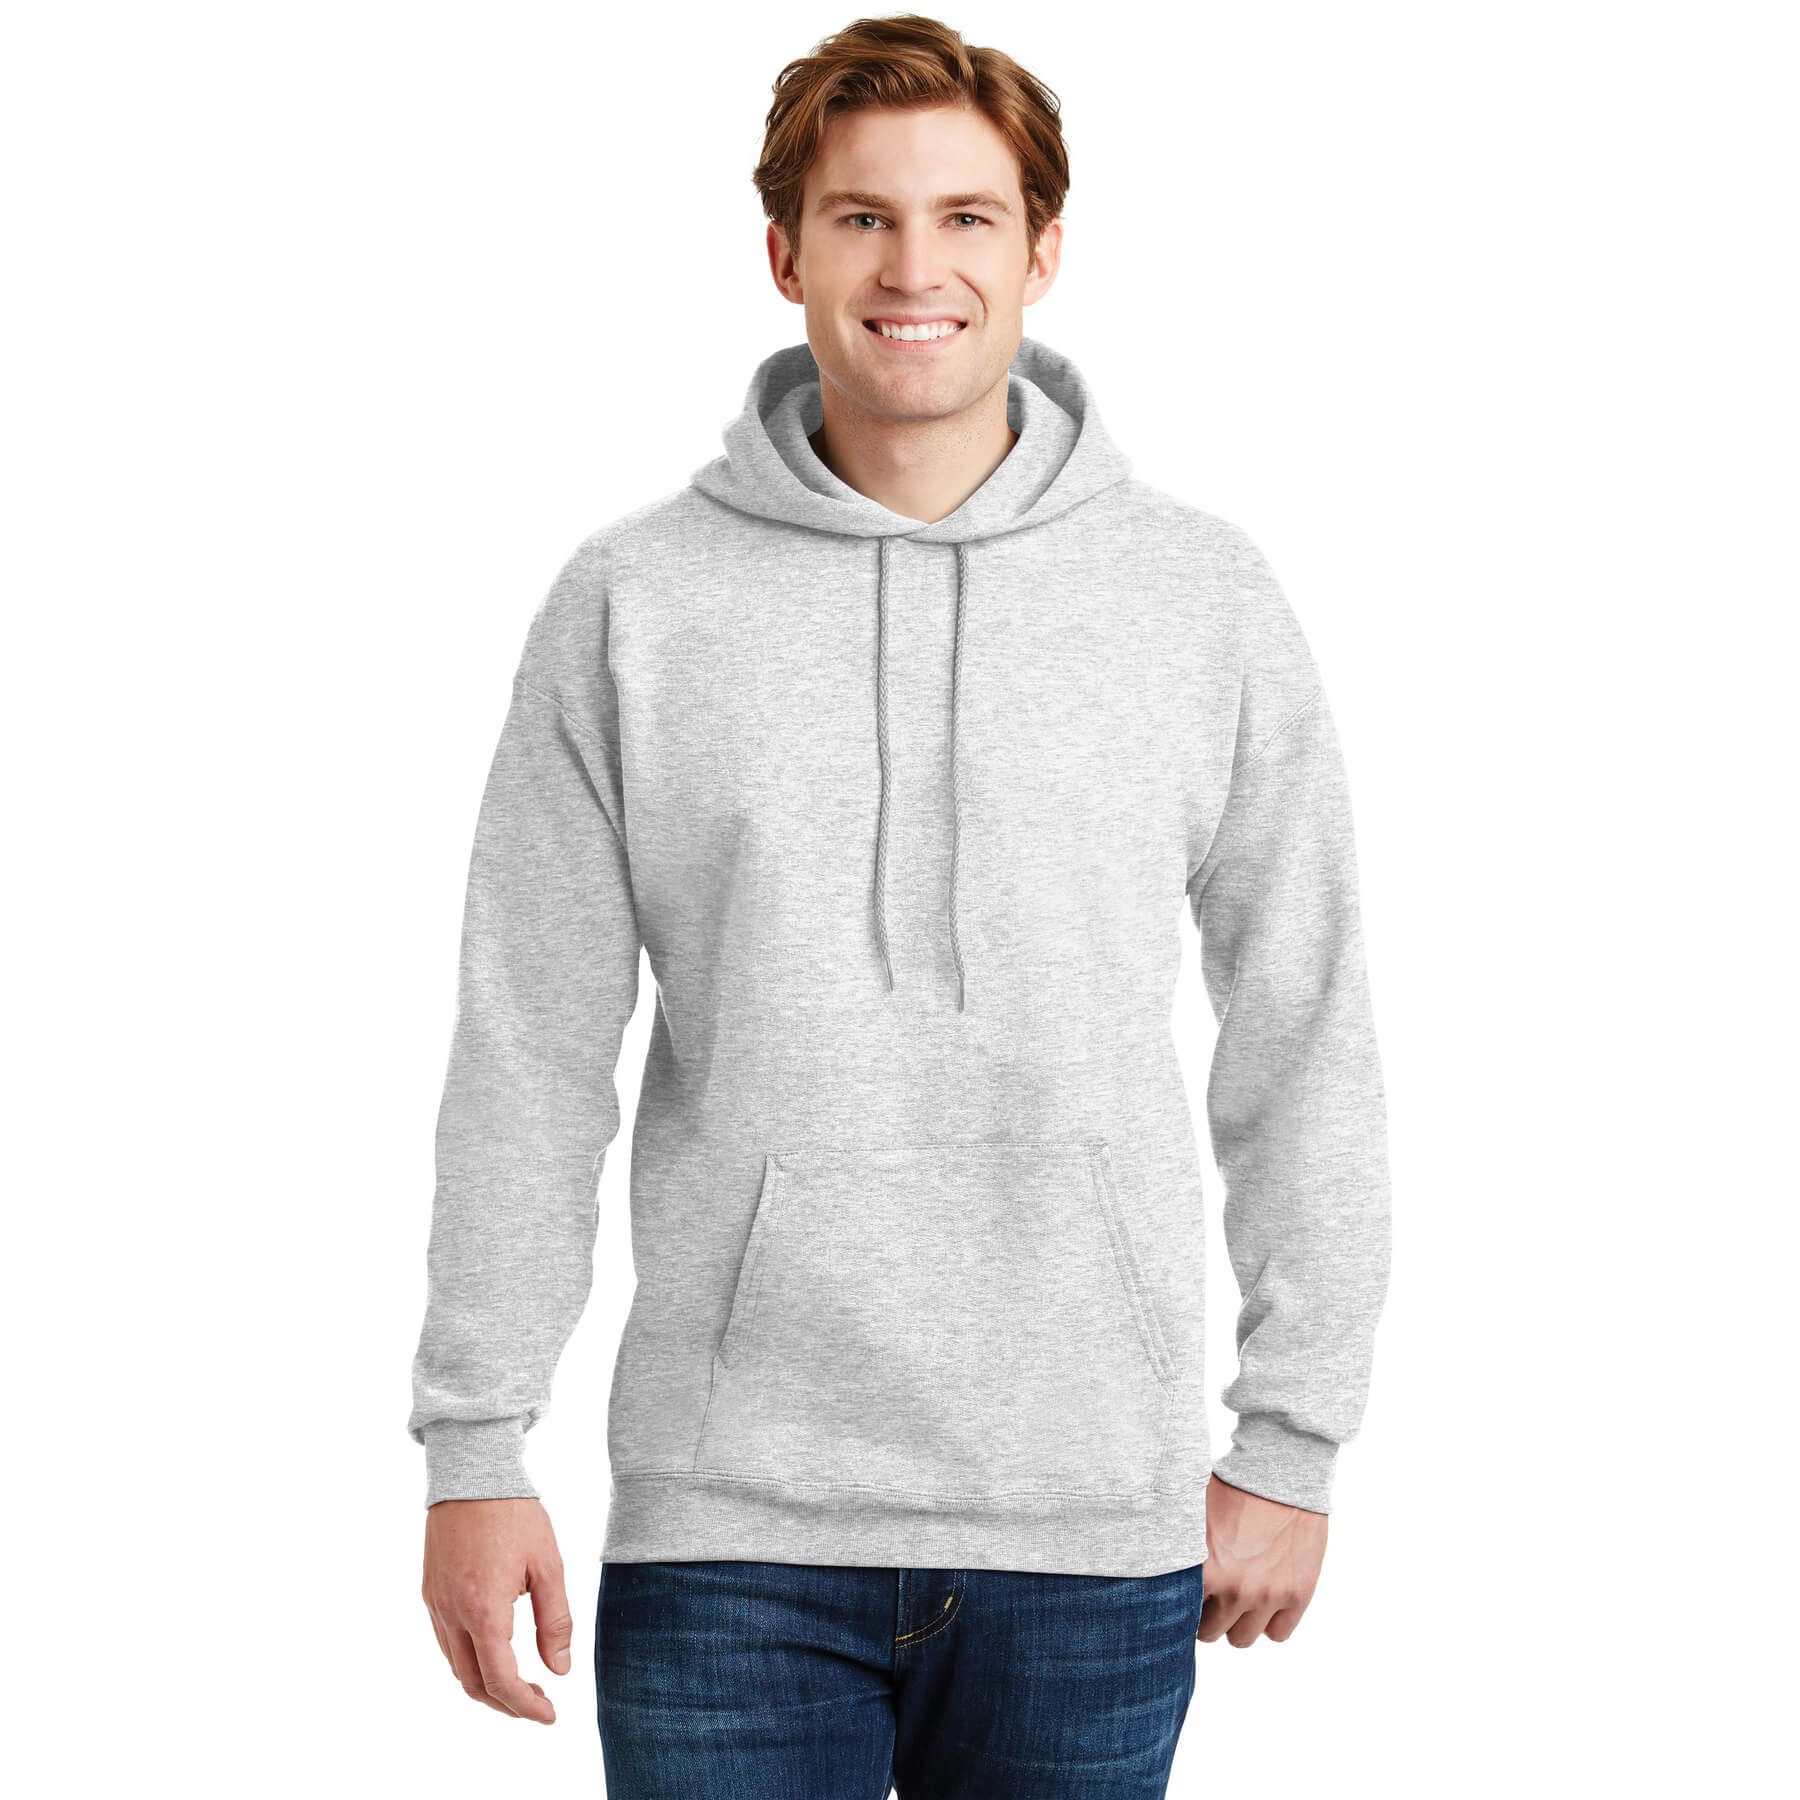 Hanes ® Ultimate Cotton ® - Pullover Hooded Sweatshirt - Phelps USA